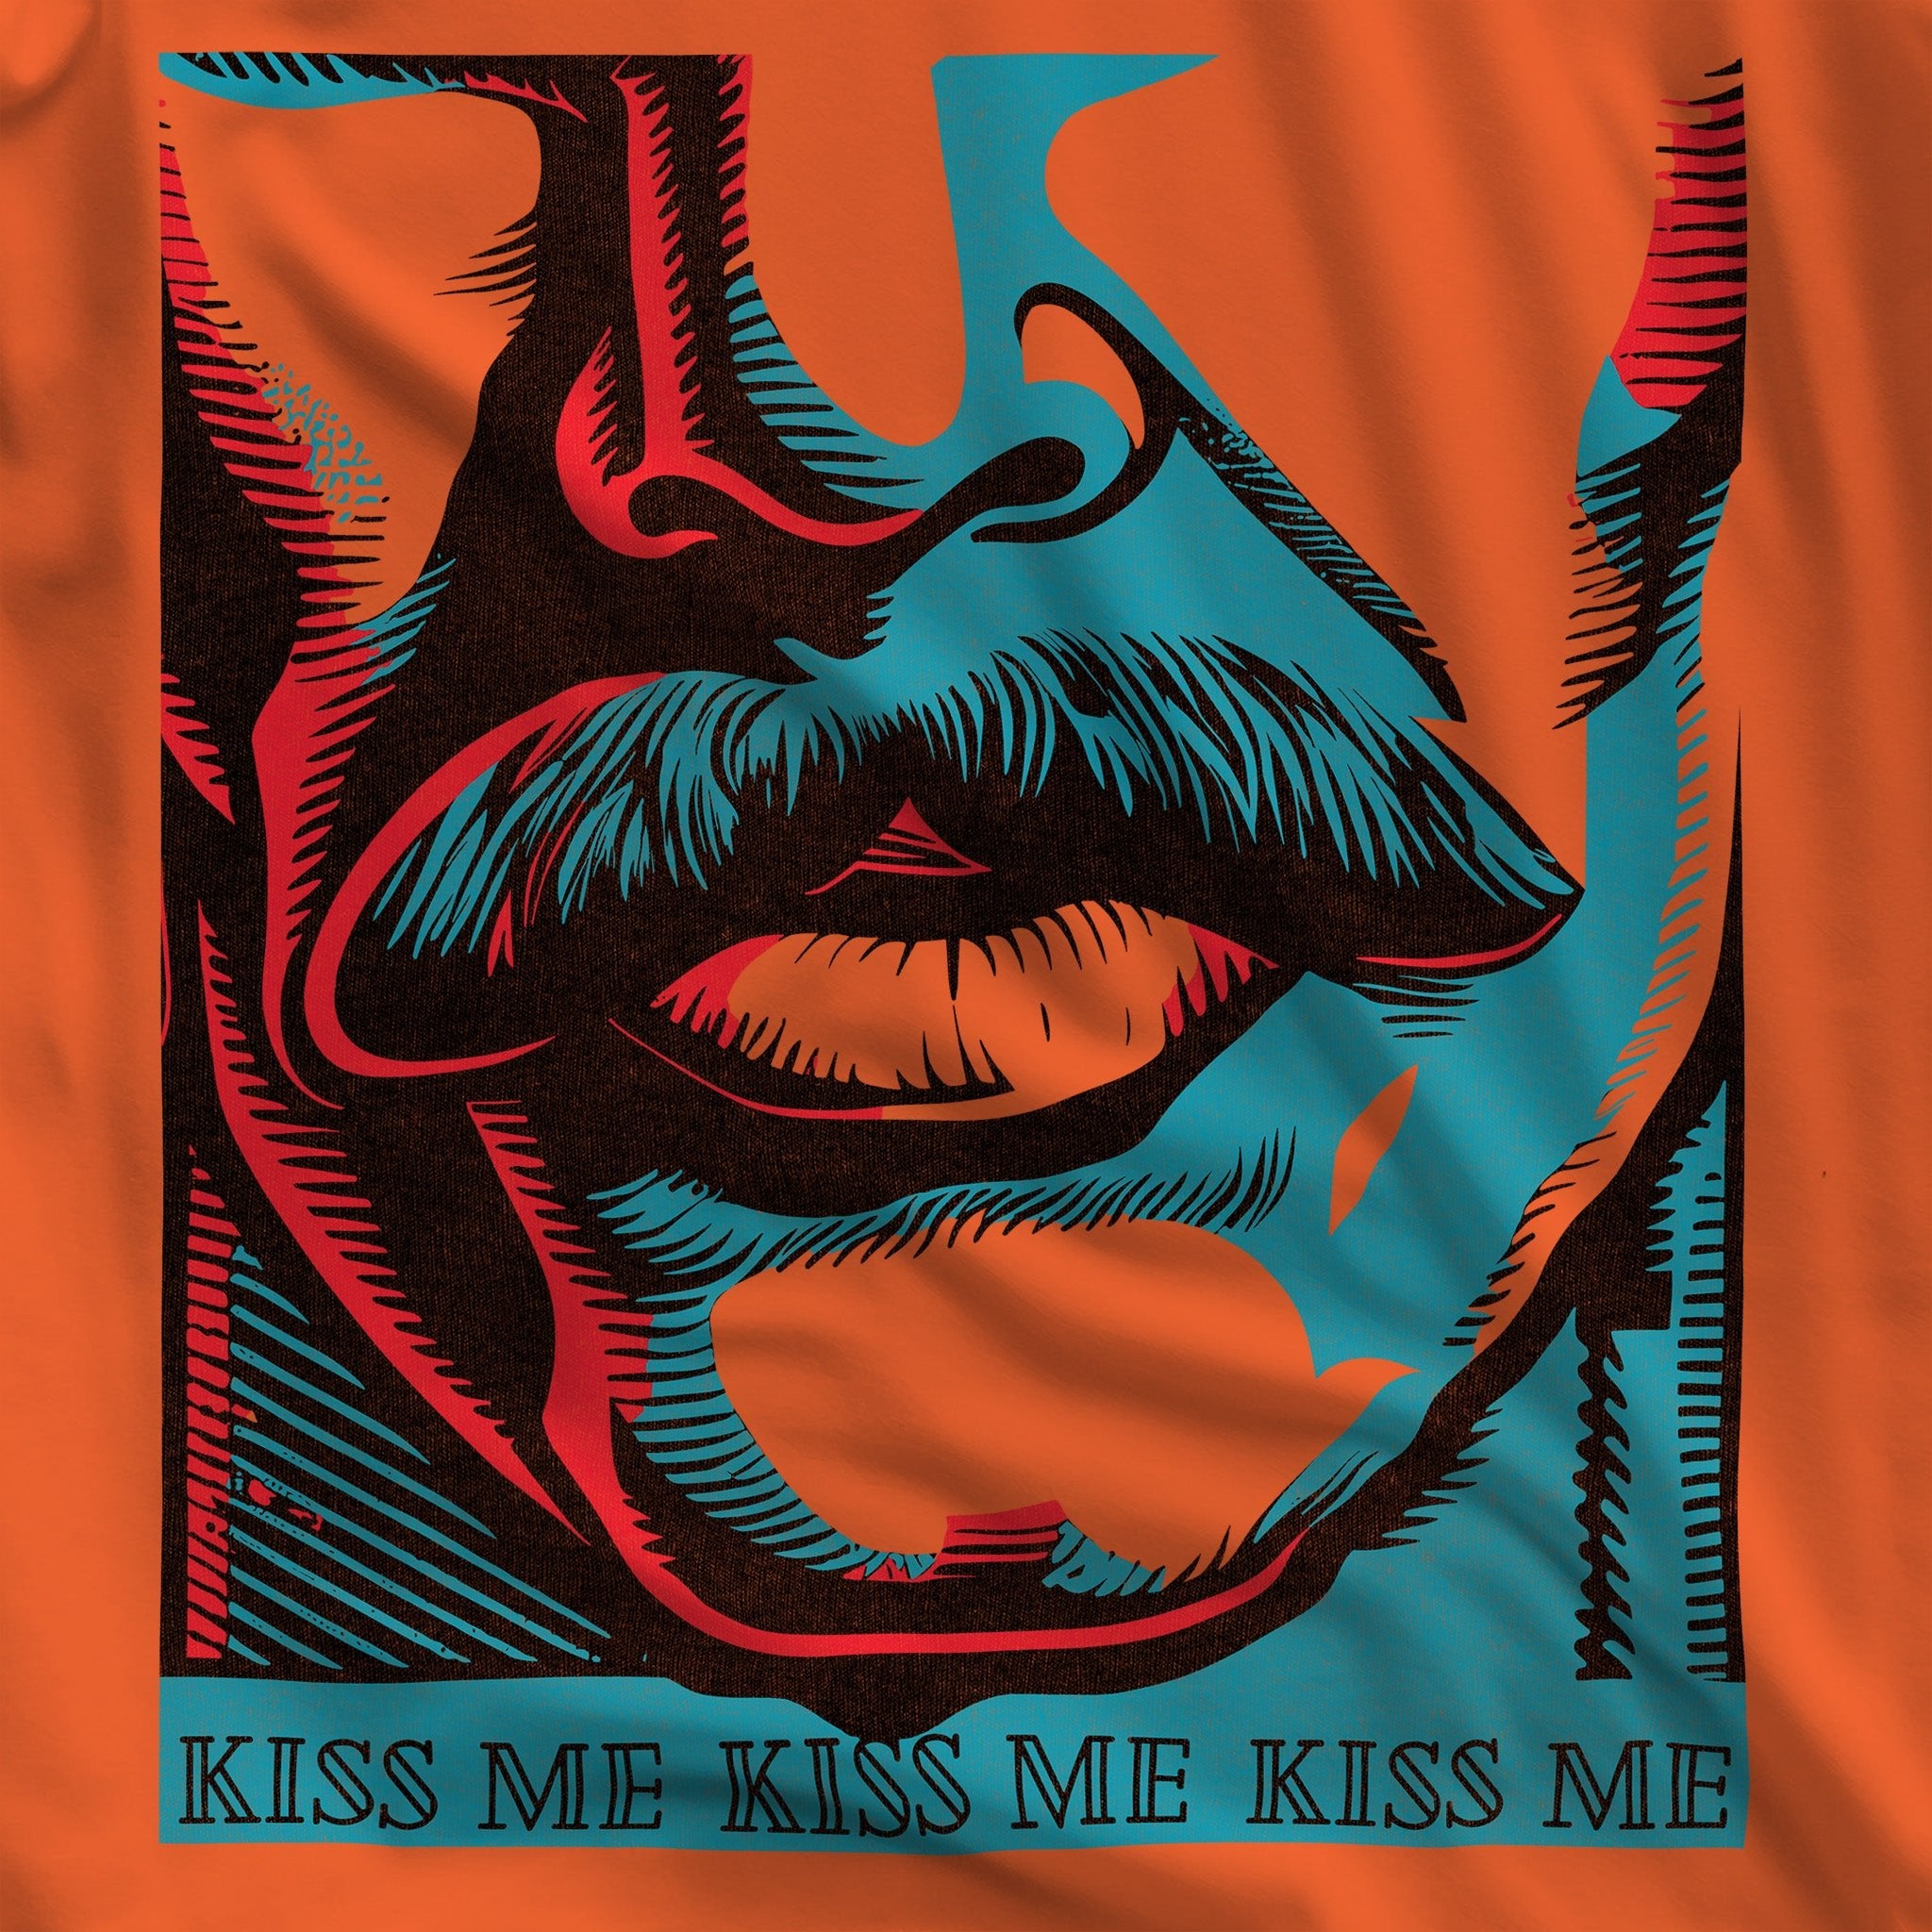 Kiss Me Gay Shirt - Pop Art Graphic Tee - Mustache Male Lips Design - Hunky Tops#color_orange